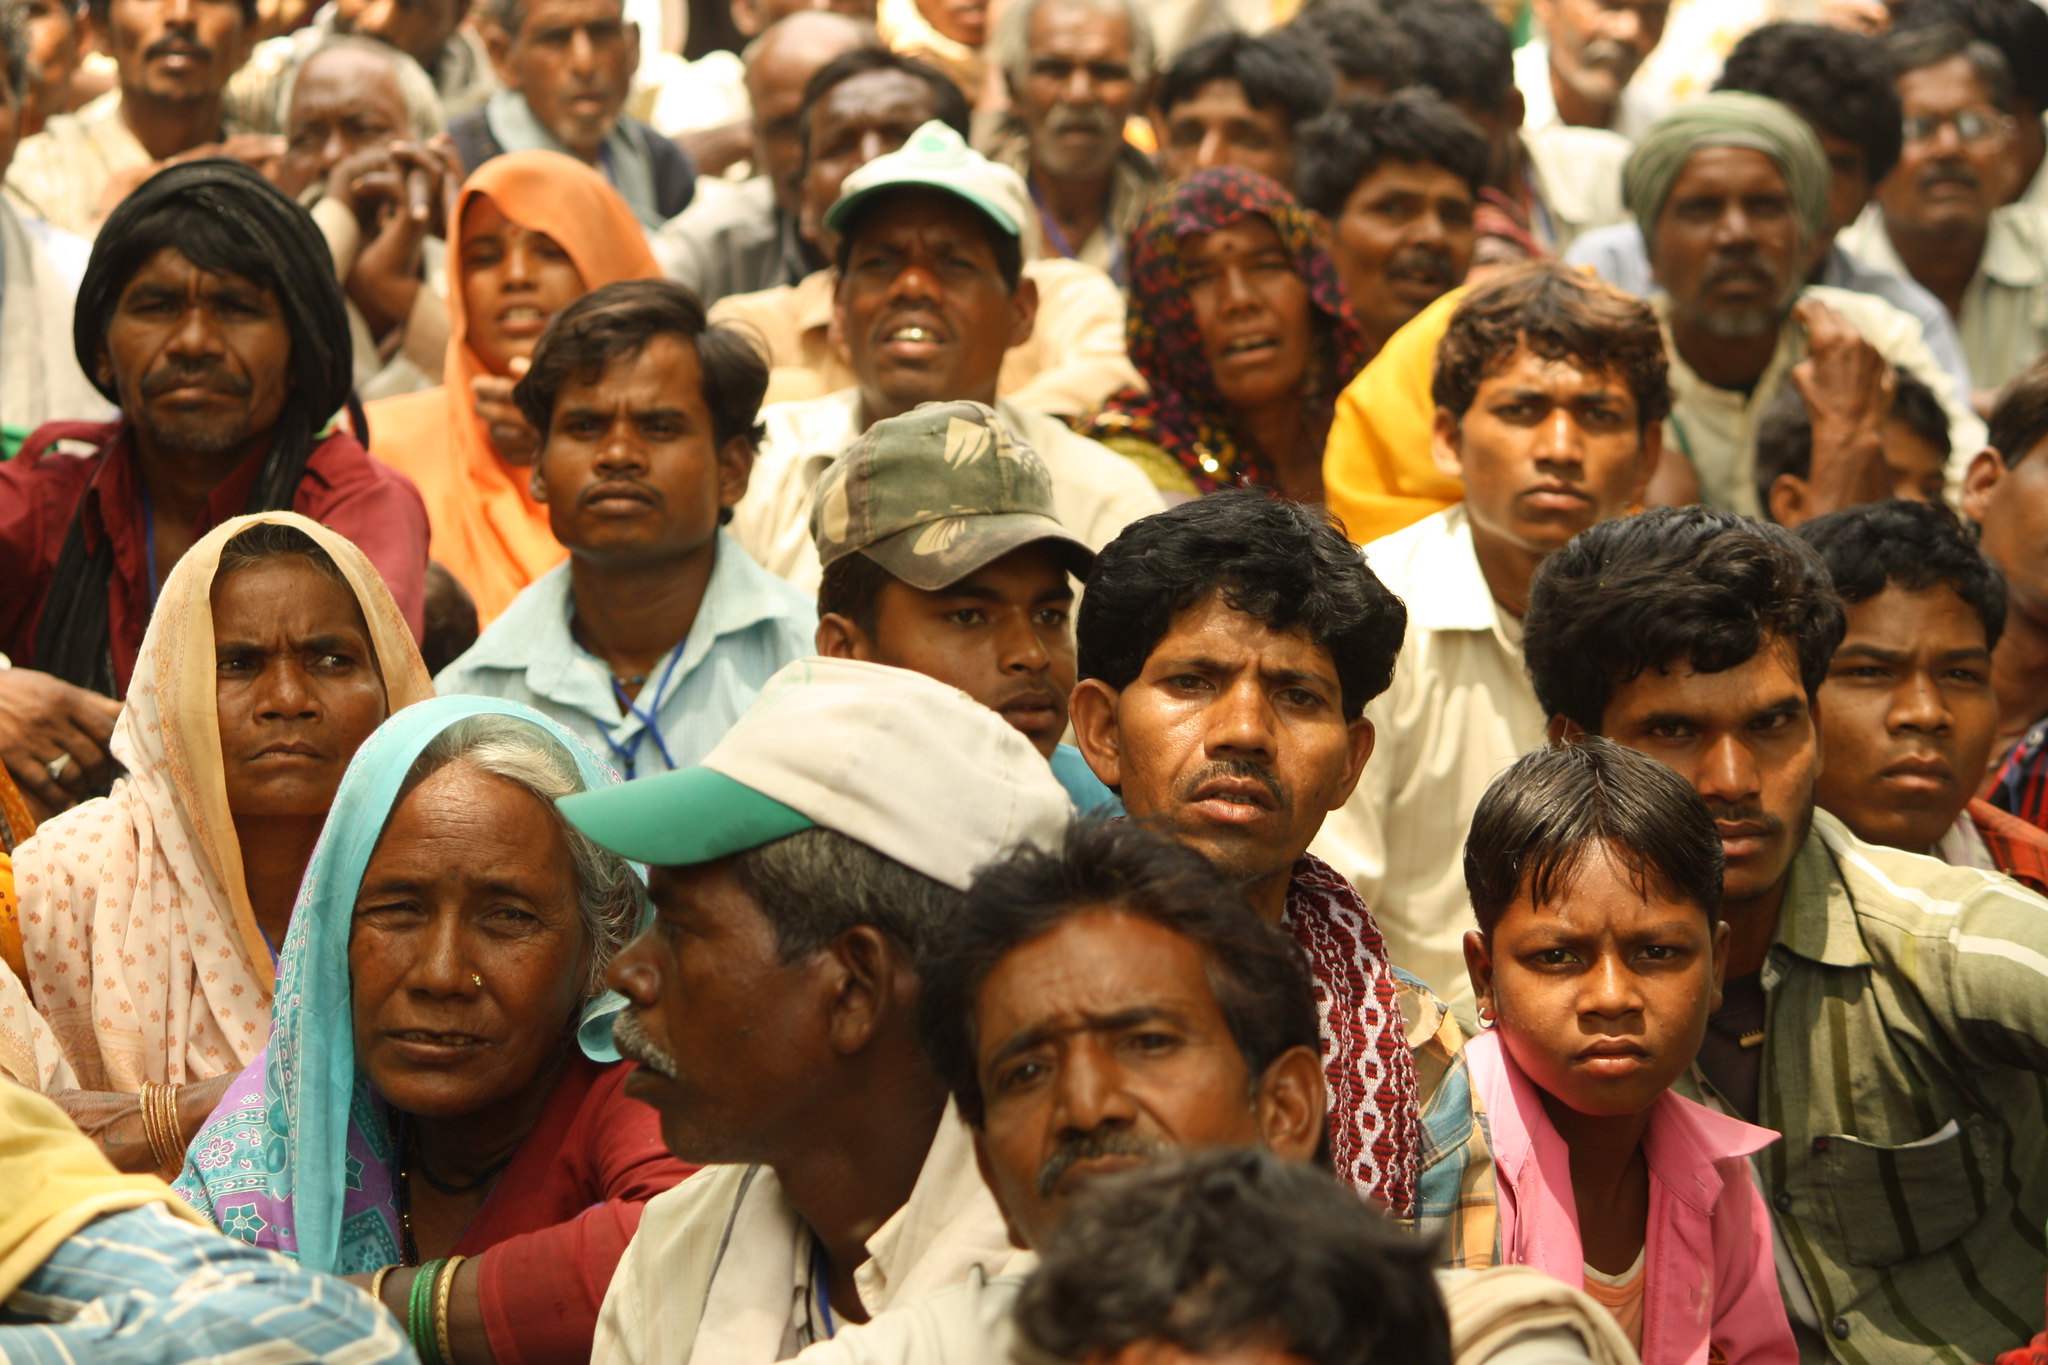 Dalits Image ActionAid India Flickr